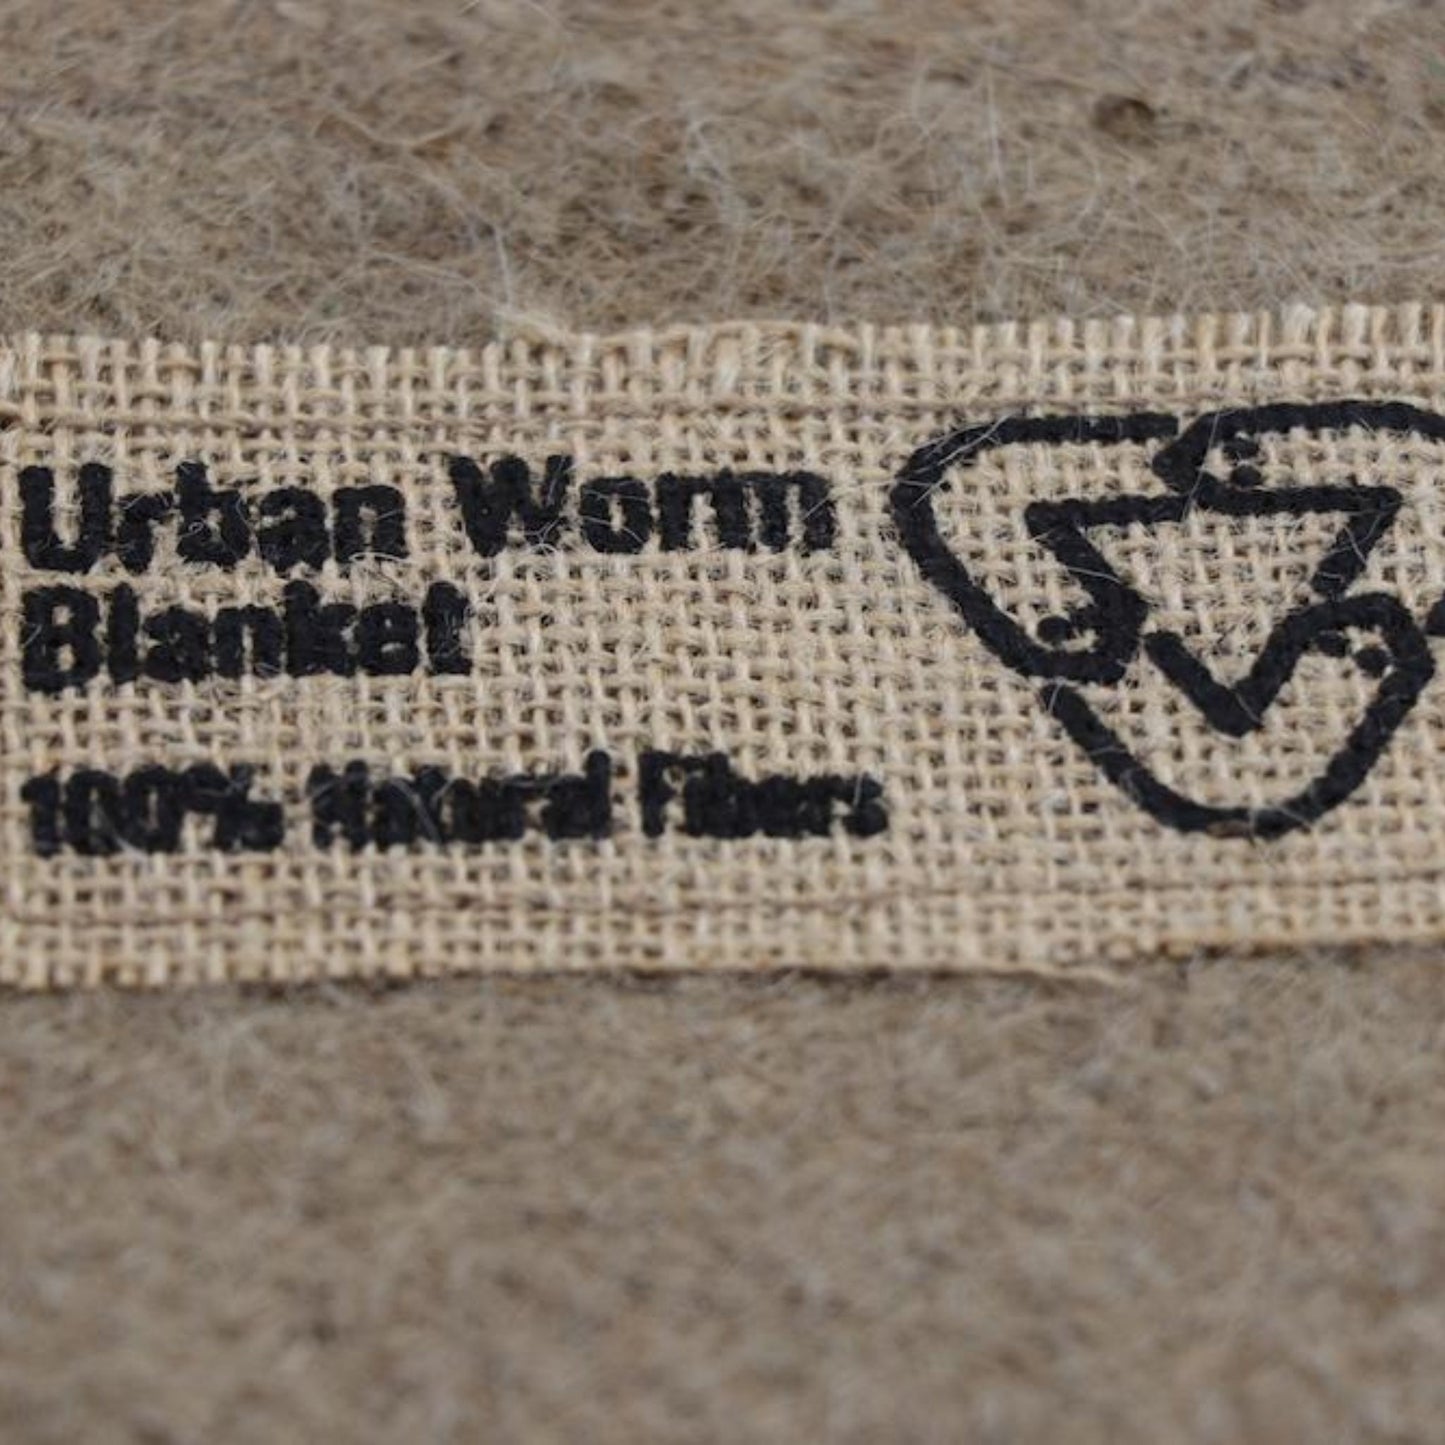 Urban Worm Blanket